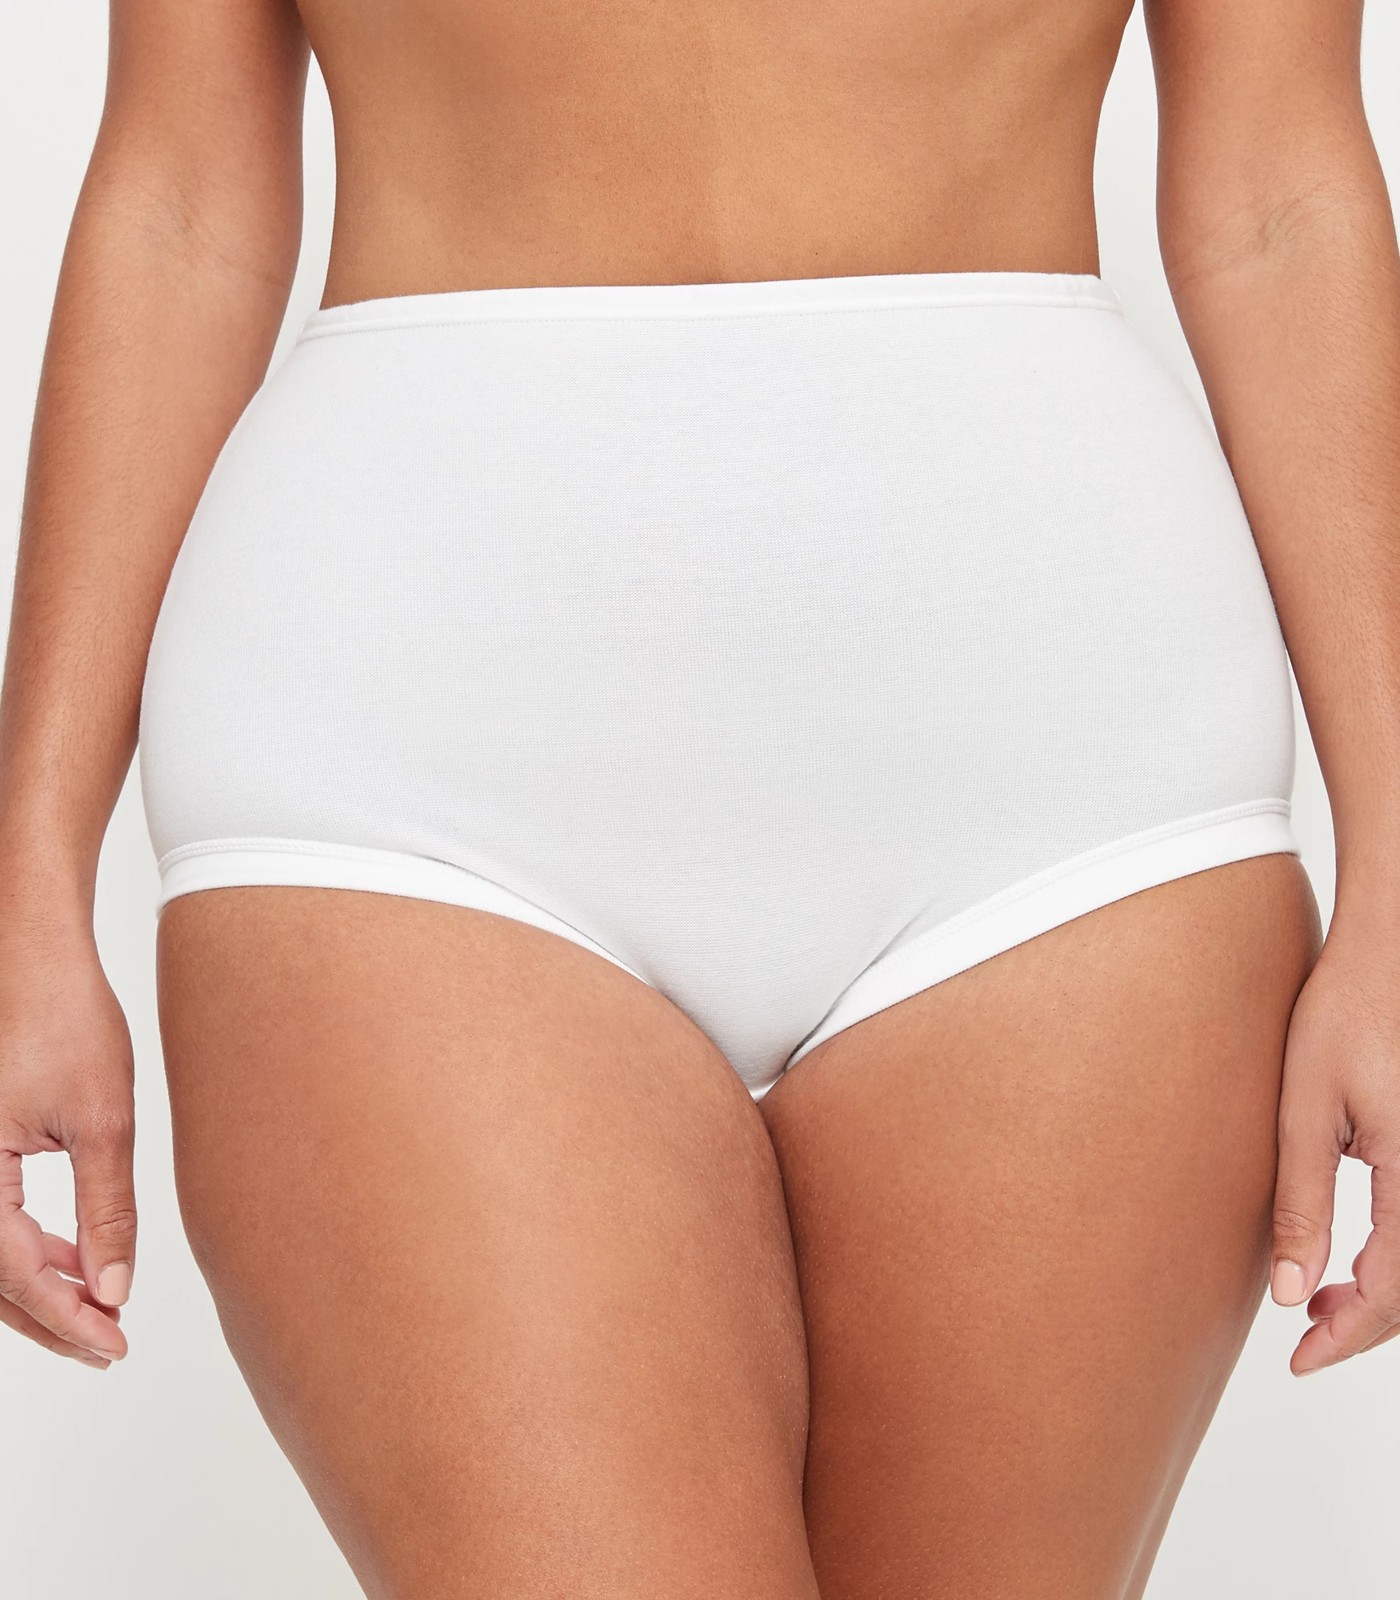 Bonds Womens Cottontails Full Brief Underwear Nude White Plus Size 12-24  W0m5b